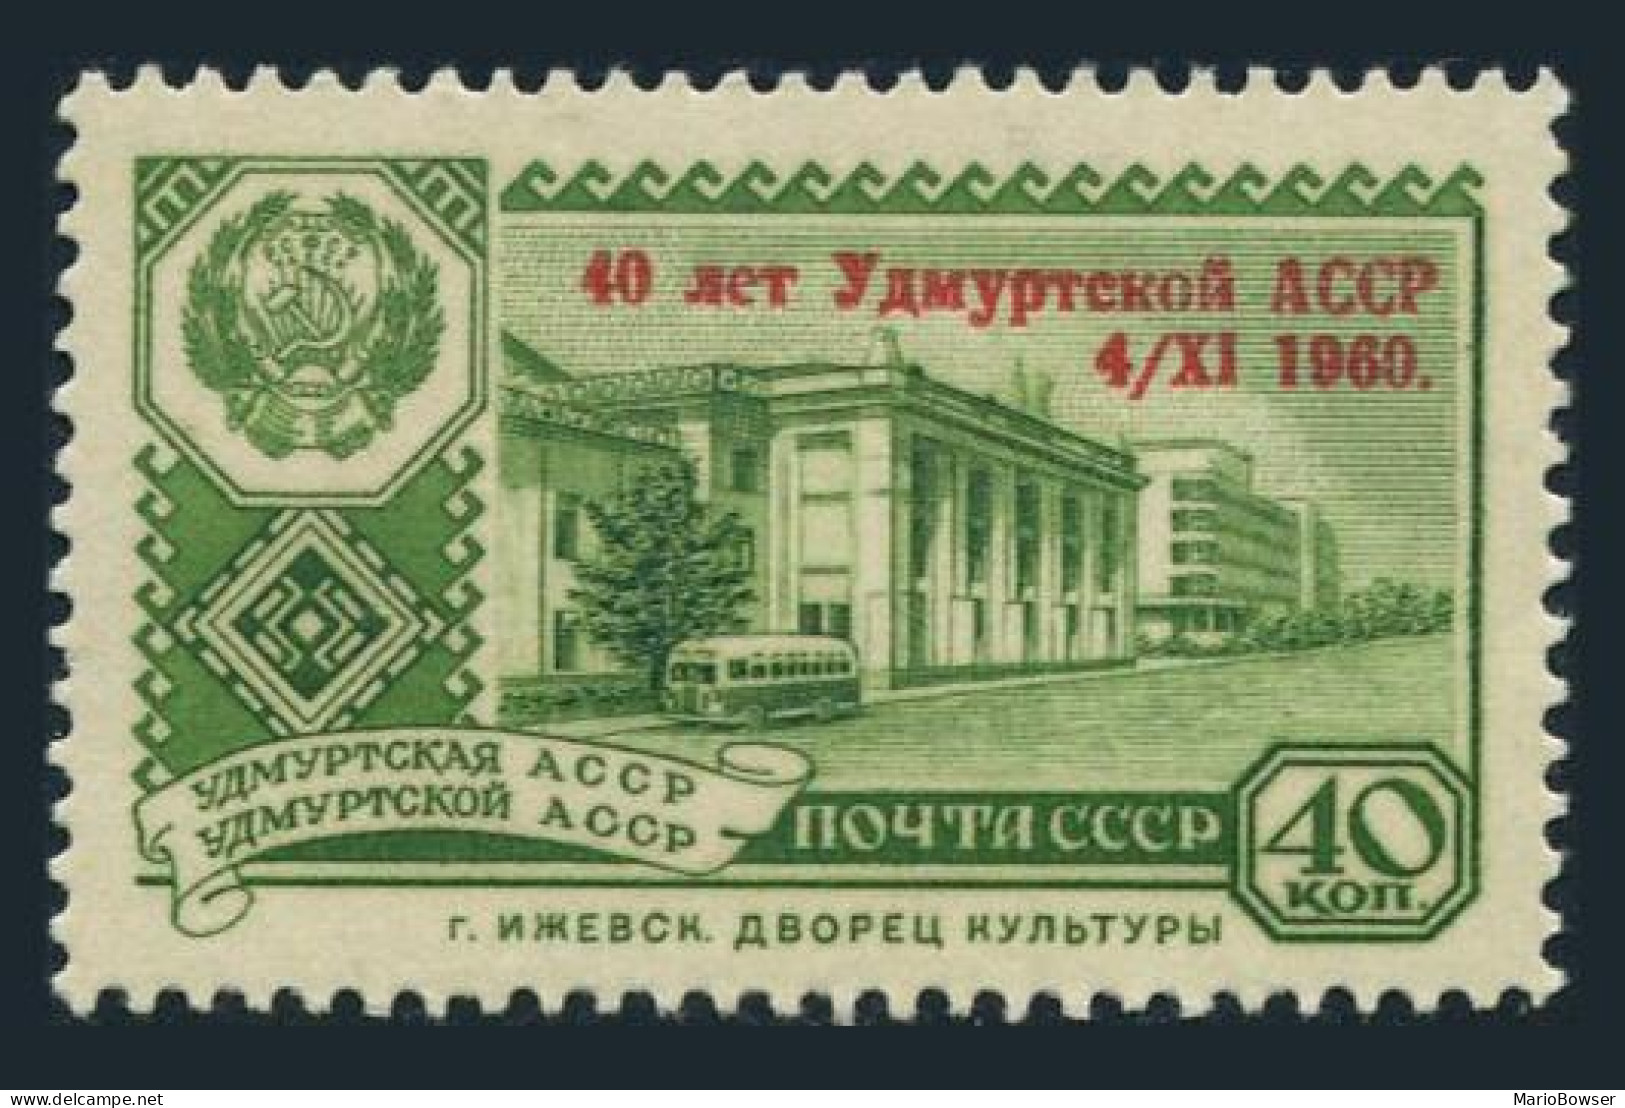 Russia 2337,MNH.Michel 2412. Udmurt Autonomous Republic,40th Ann.1960. - Ungebraucht